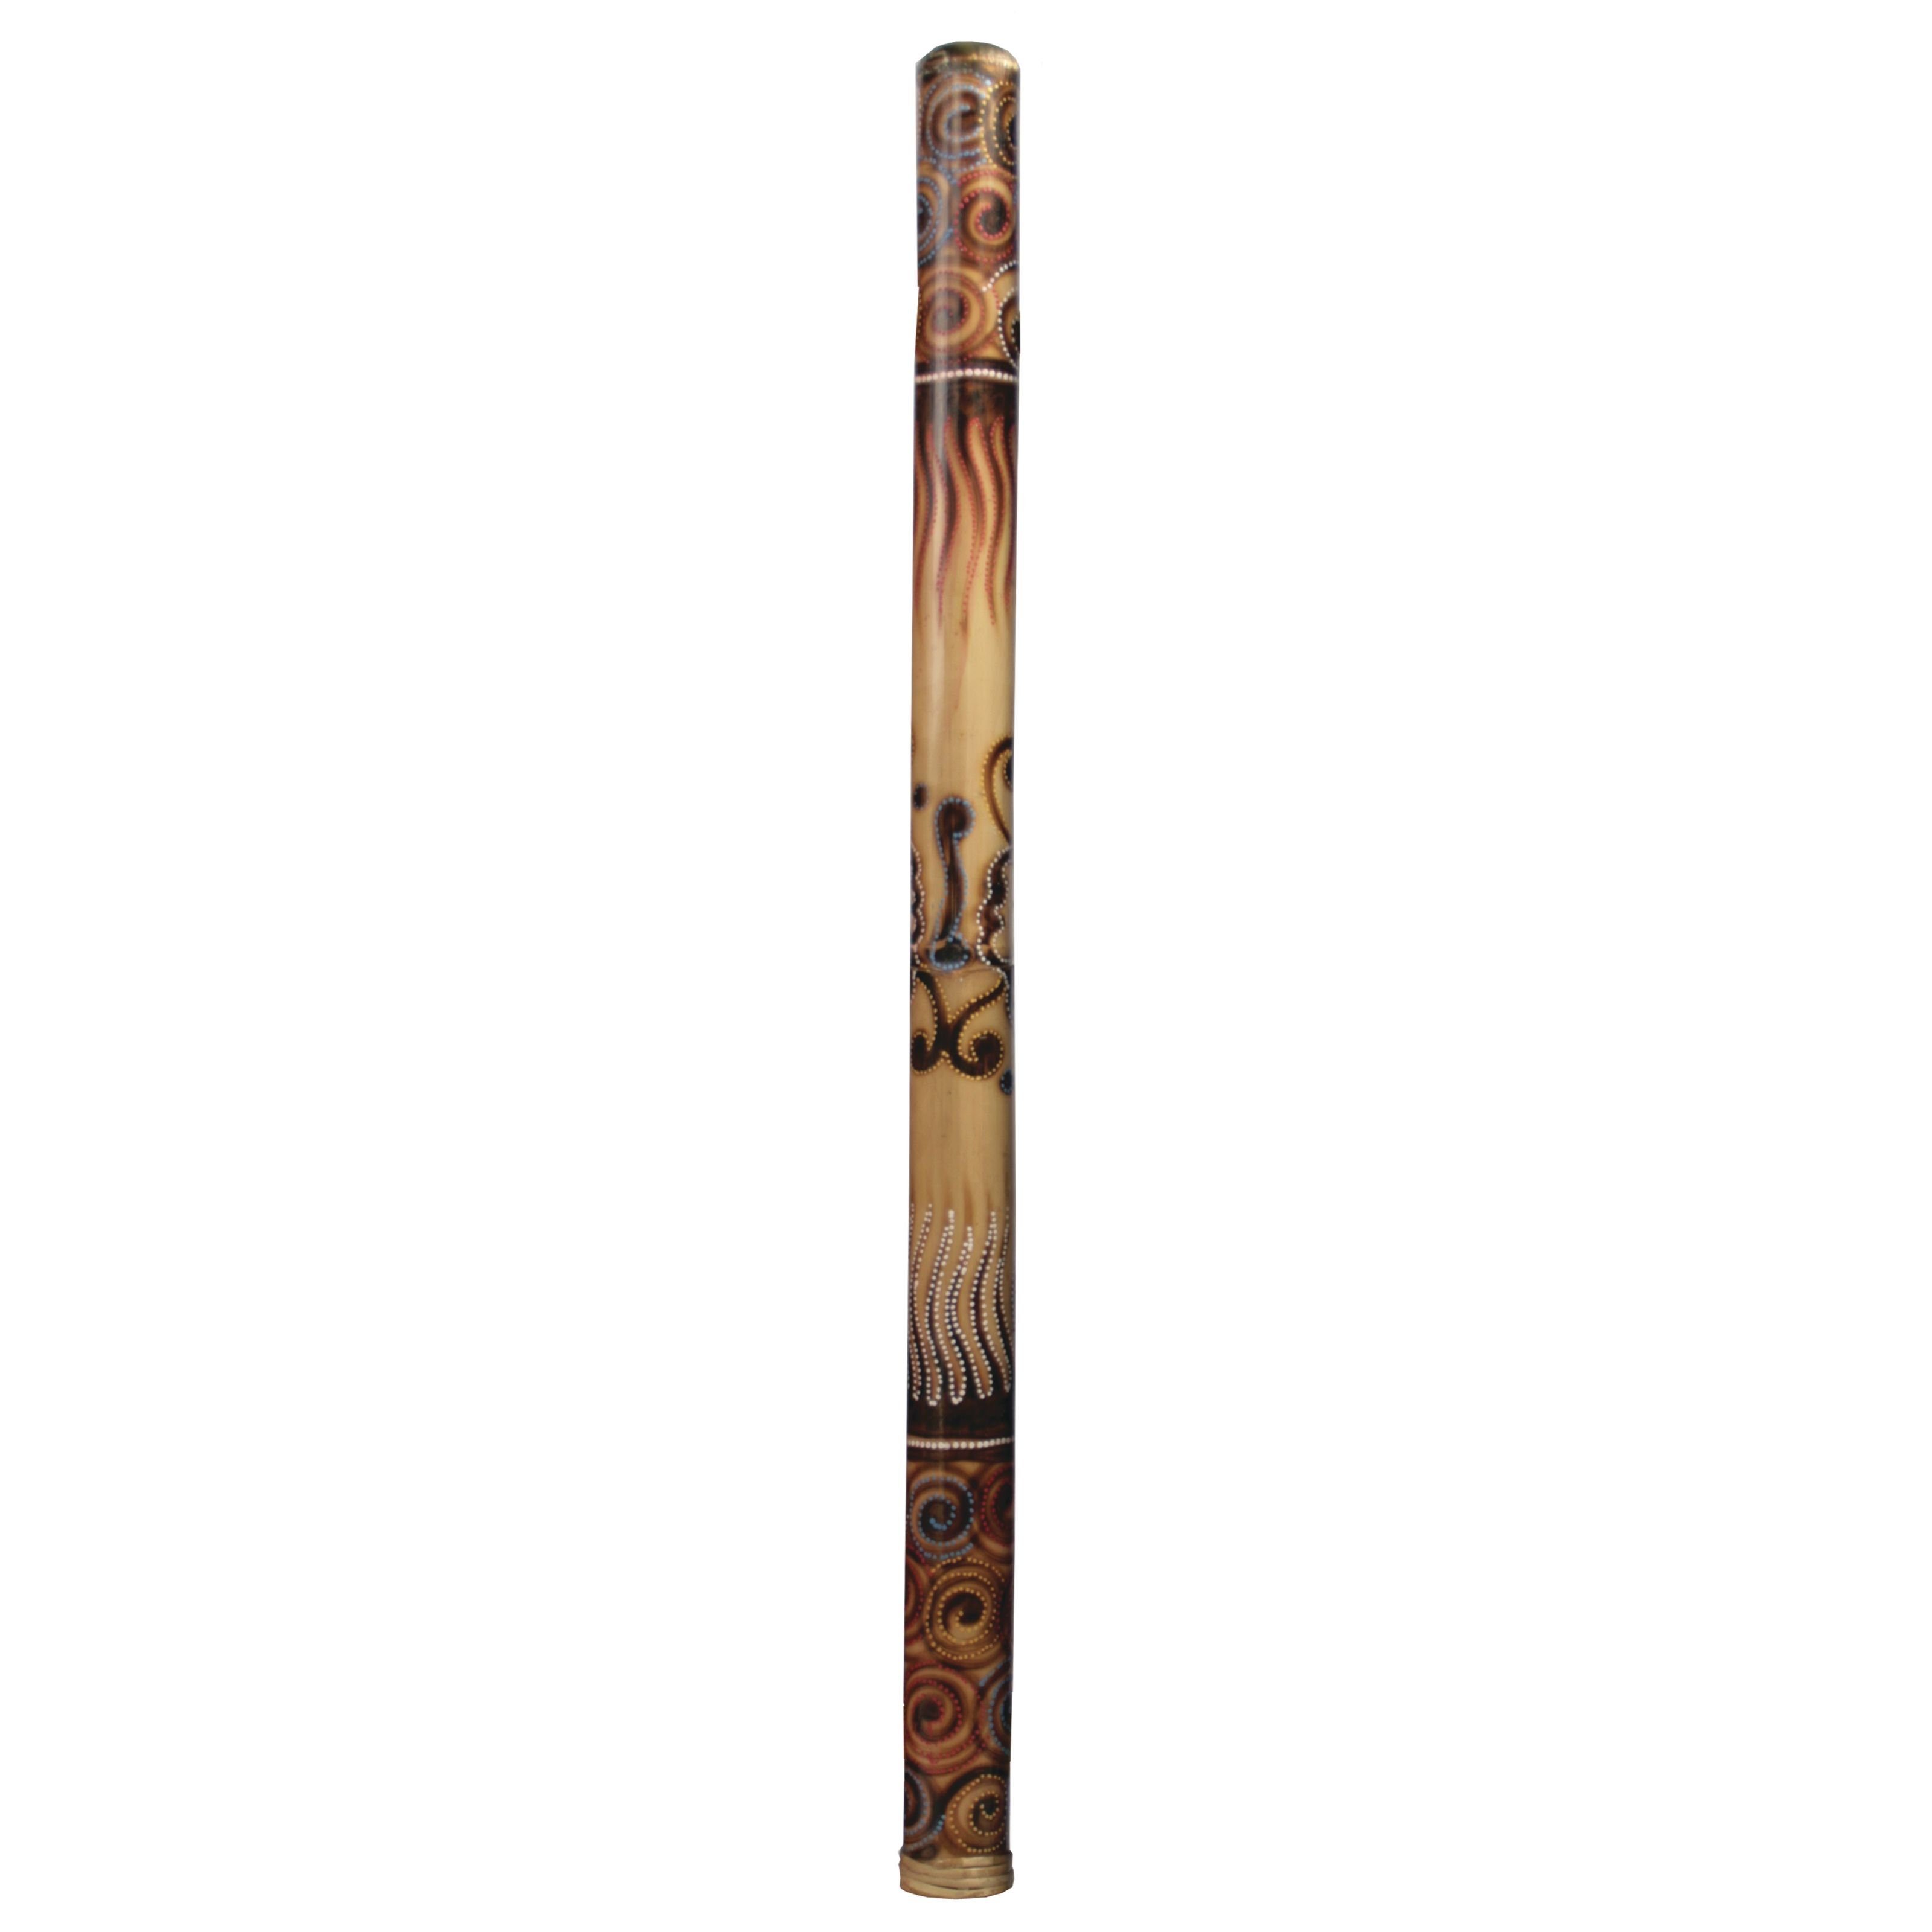 Terré Didgeridoo, Bambus Didgeridoo beflammt und bemalt ungestimmt 120cm, Percussion, Ritual Percussion, Bambus Didgeridoo, beflammt und bemalt, ungestimmt, 120cm